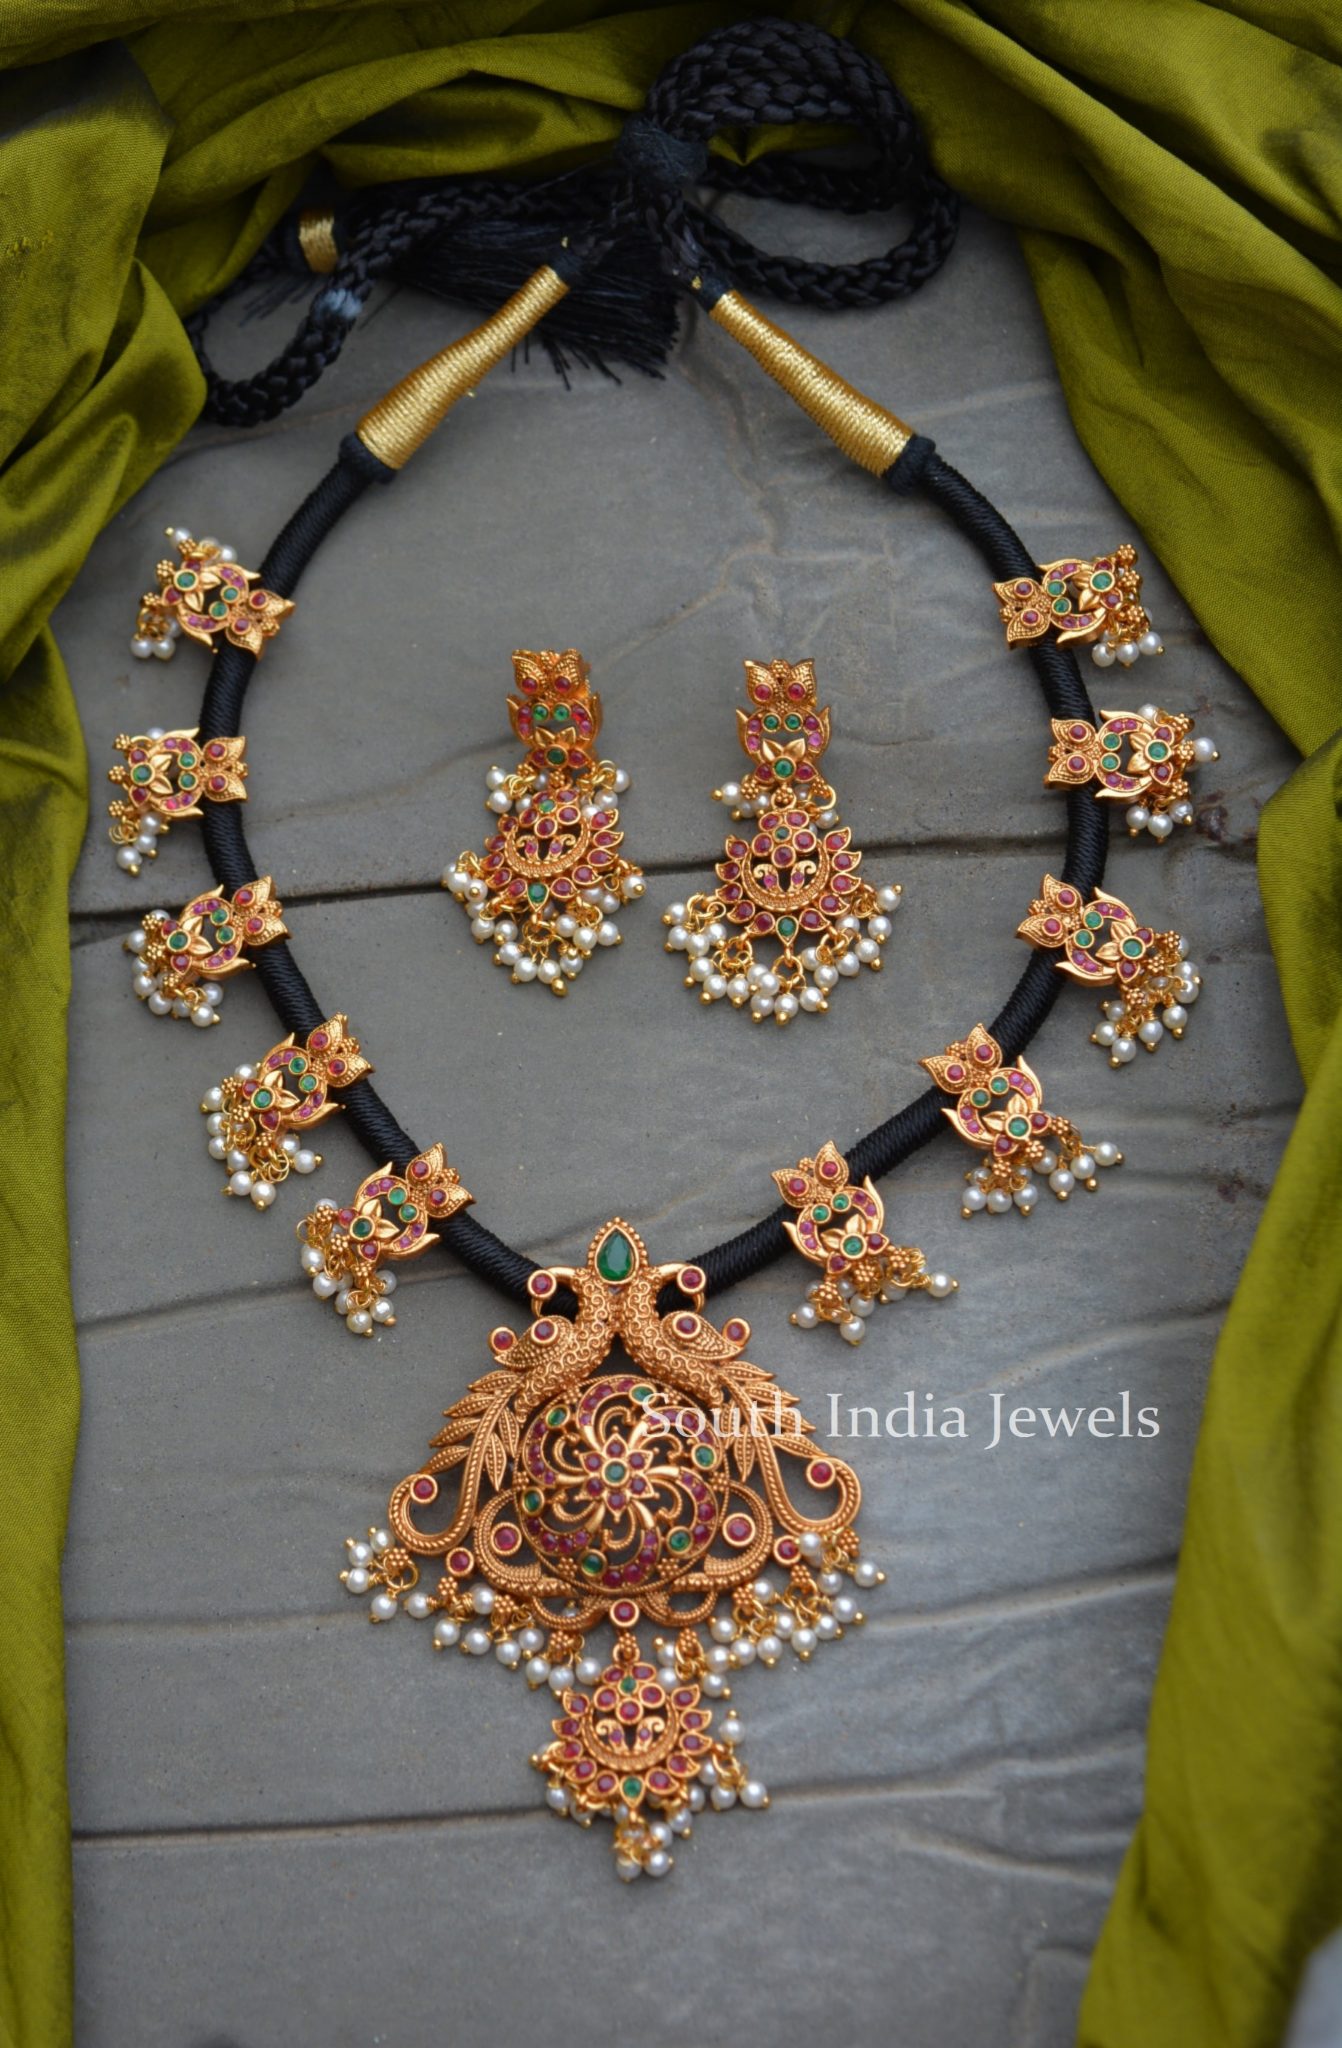 Unique Black Thread Peacock Design Necklace - South India Jewels